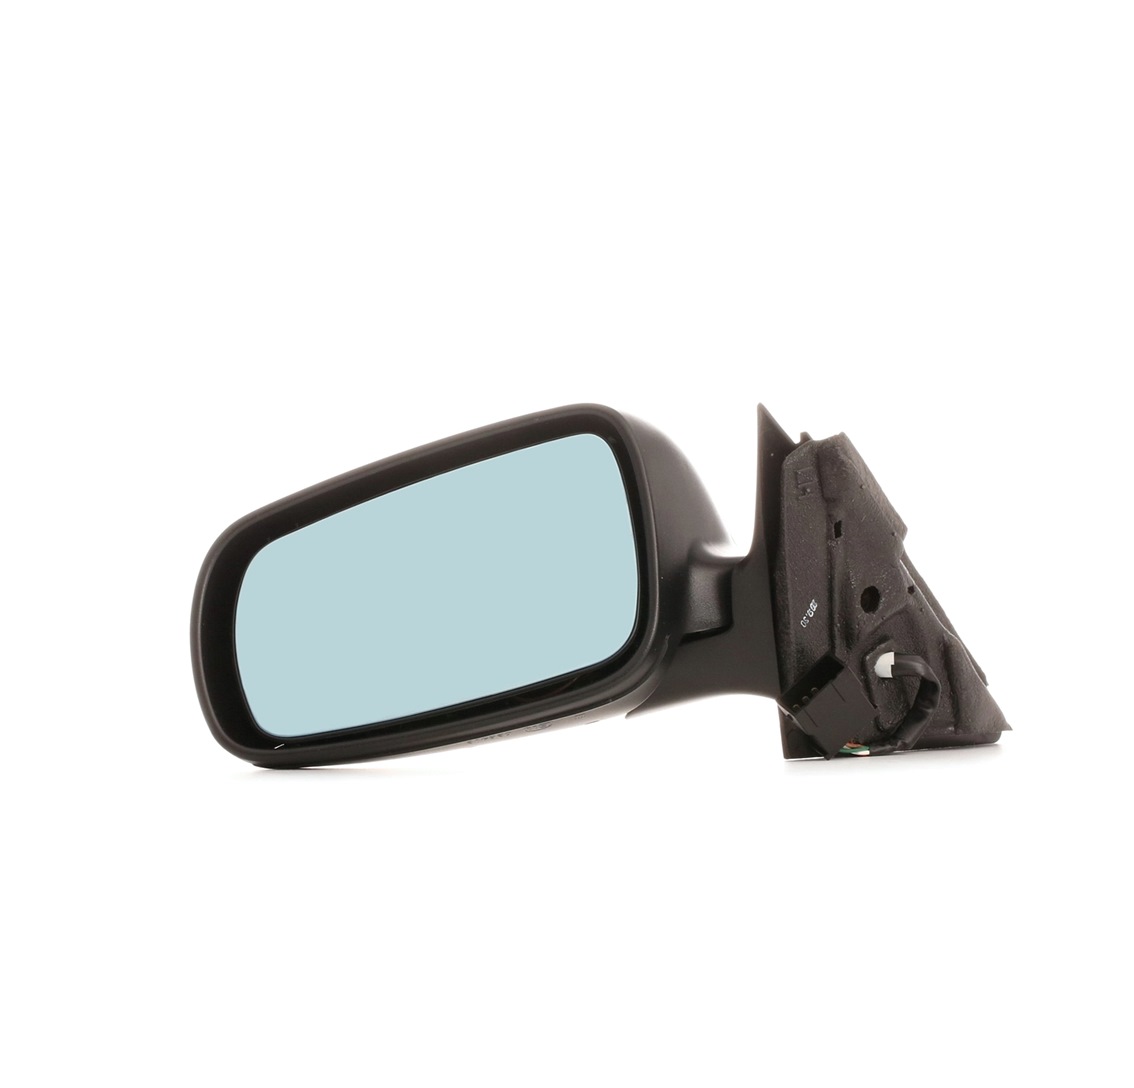 STARK SKOM-1040022 Wing mirror Left, black, for electric mirror adjustment, Aspherical, Tinted, Heatable, Large mirror housing